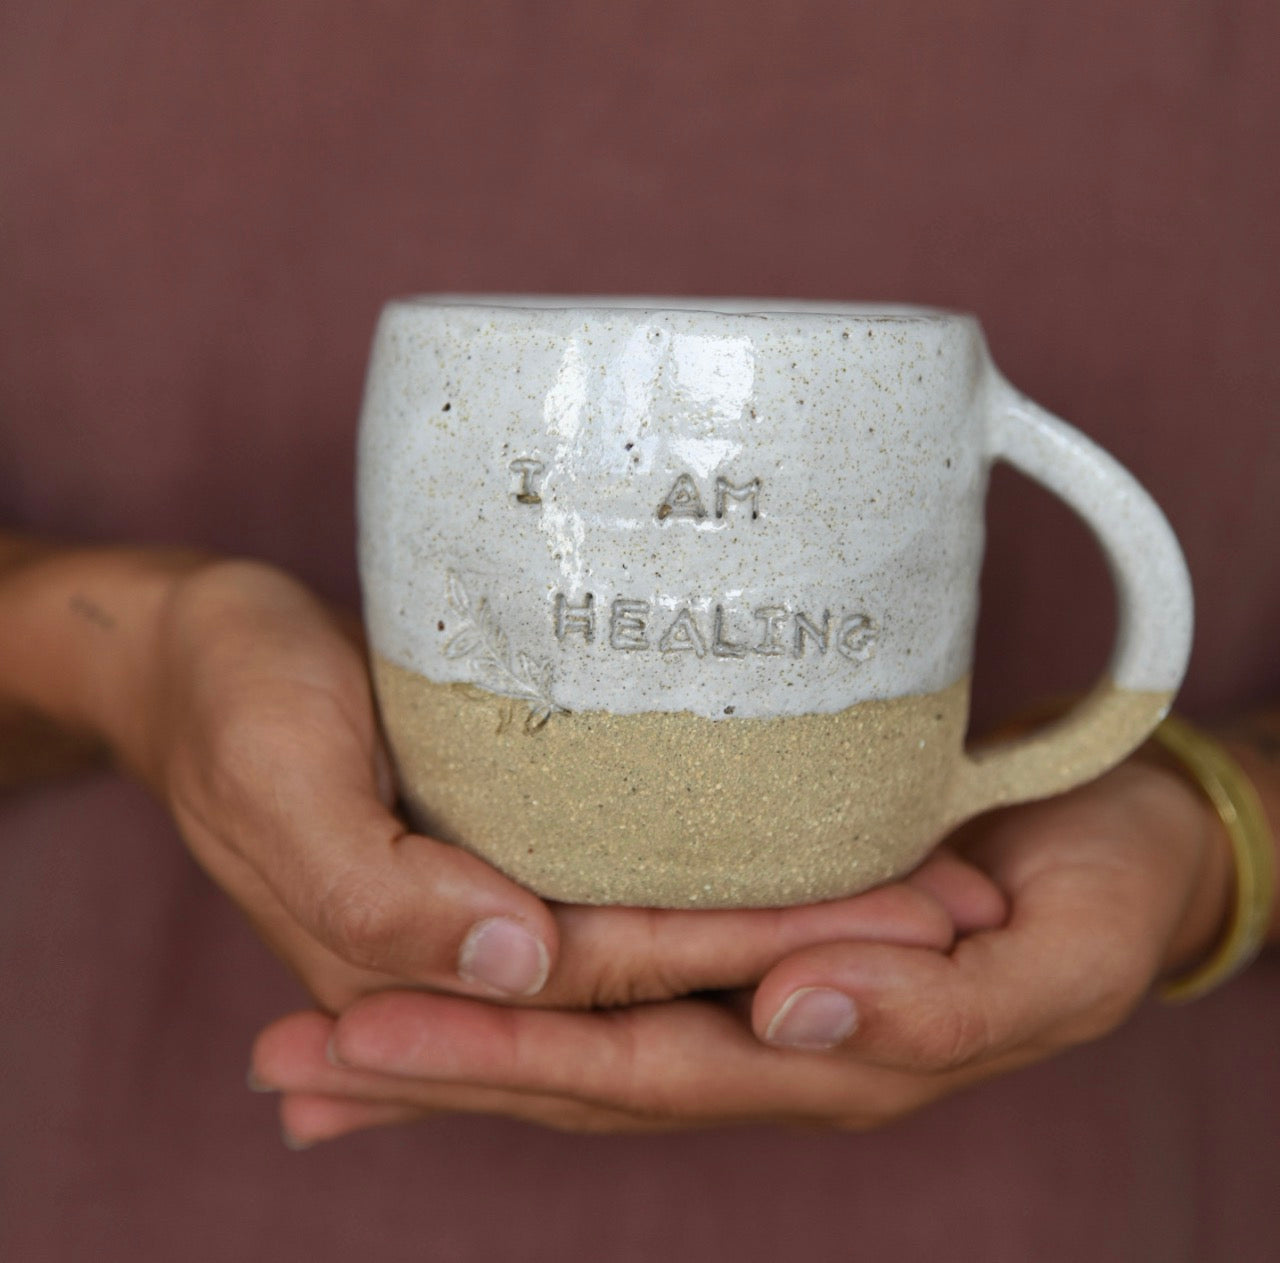 I AM Healing Mug